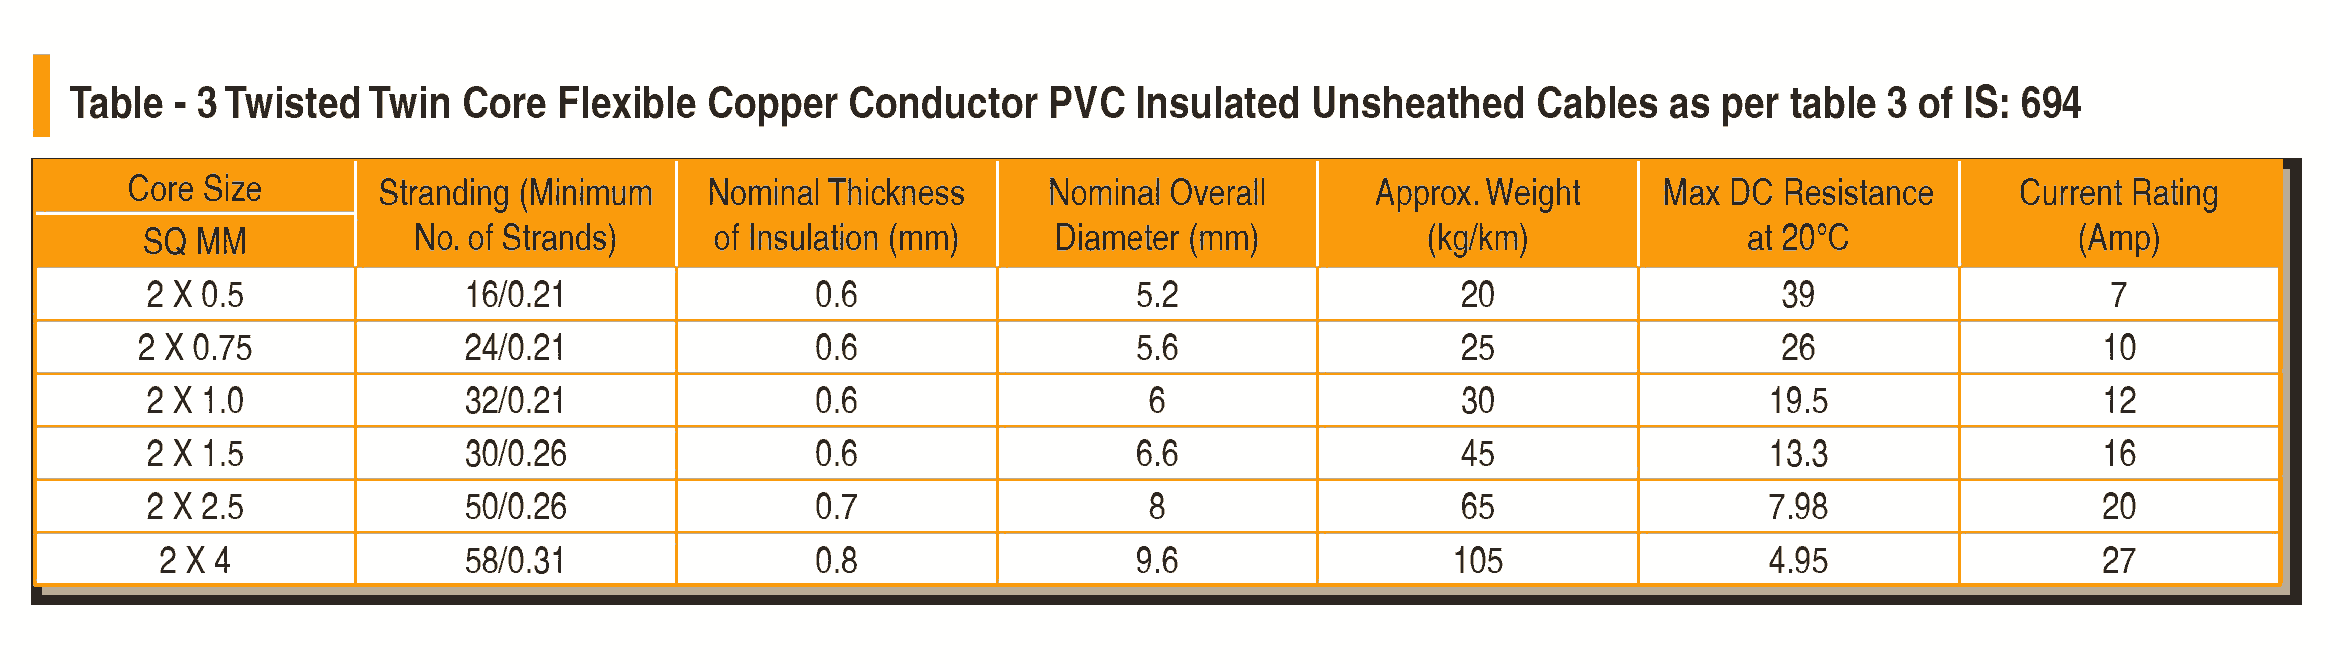 CU PVC Flexible Cables